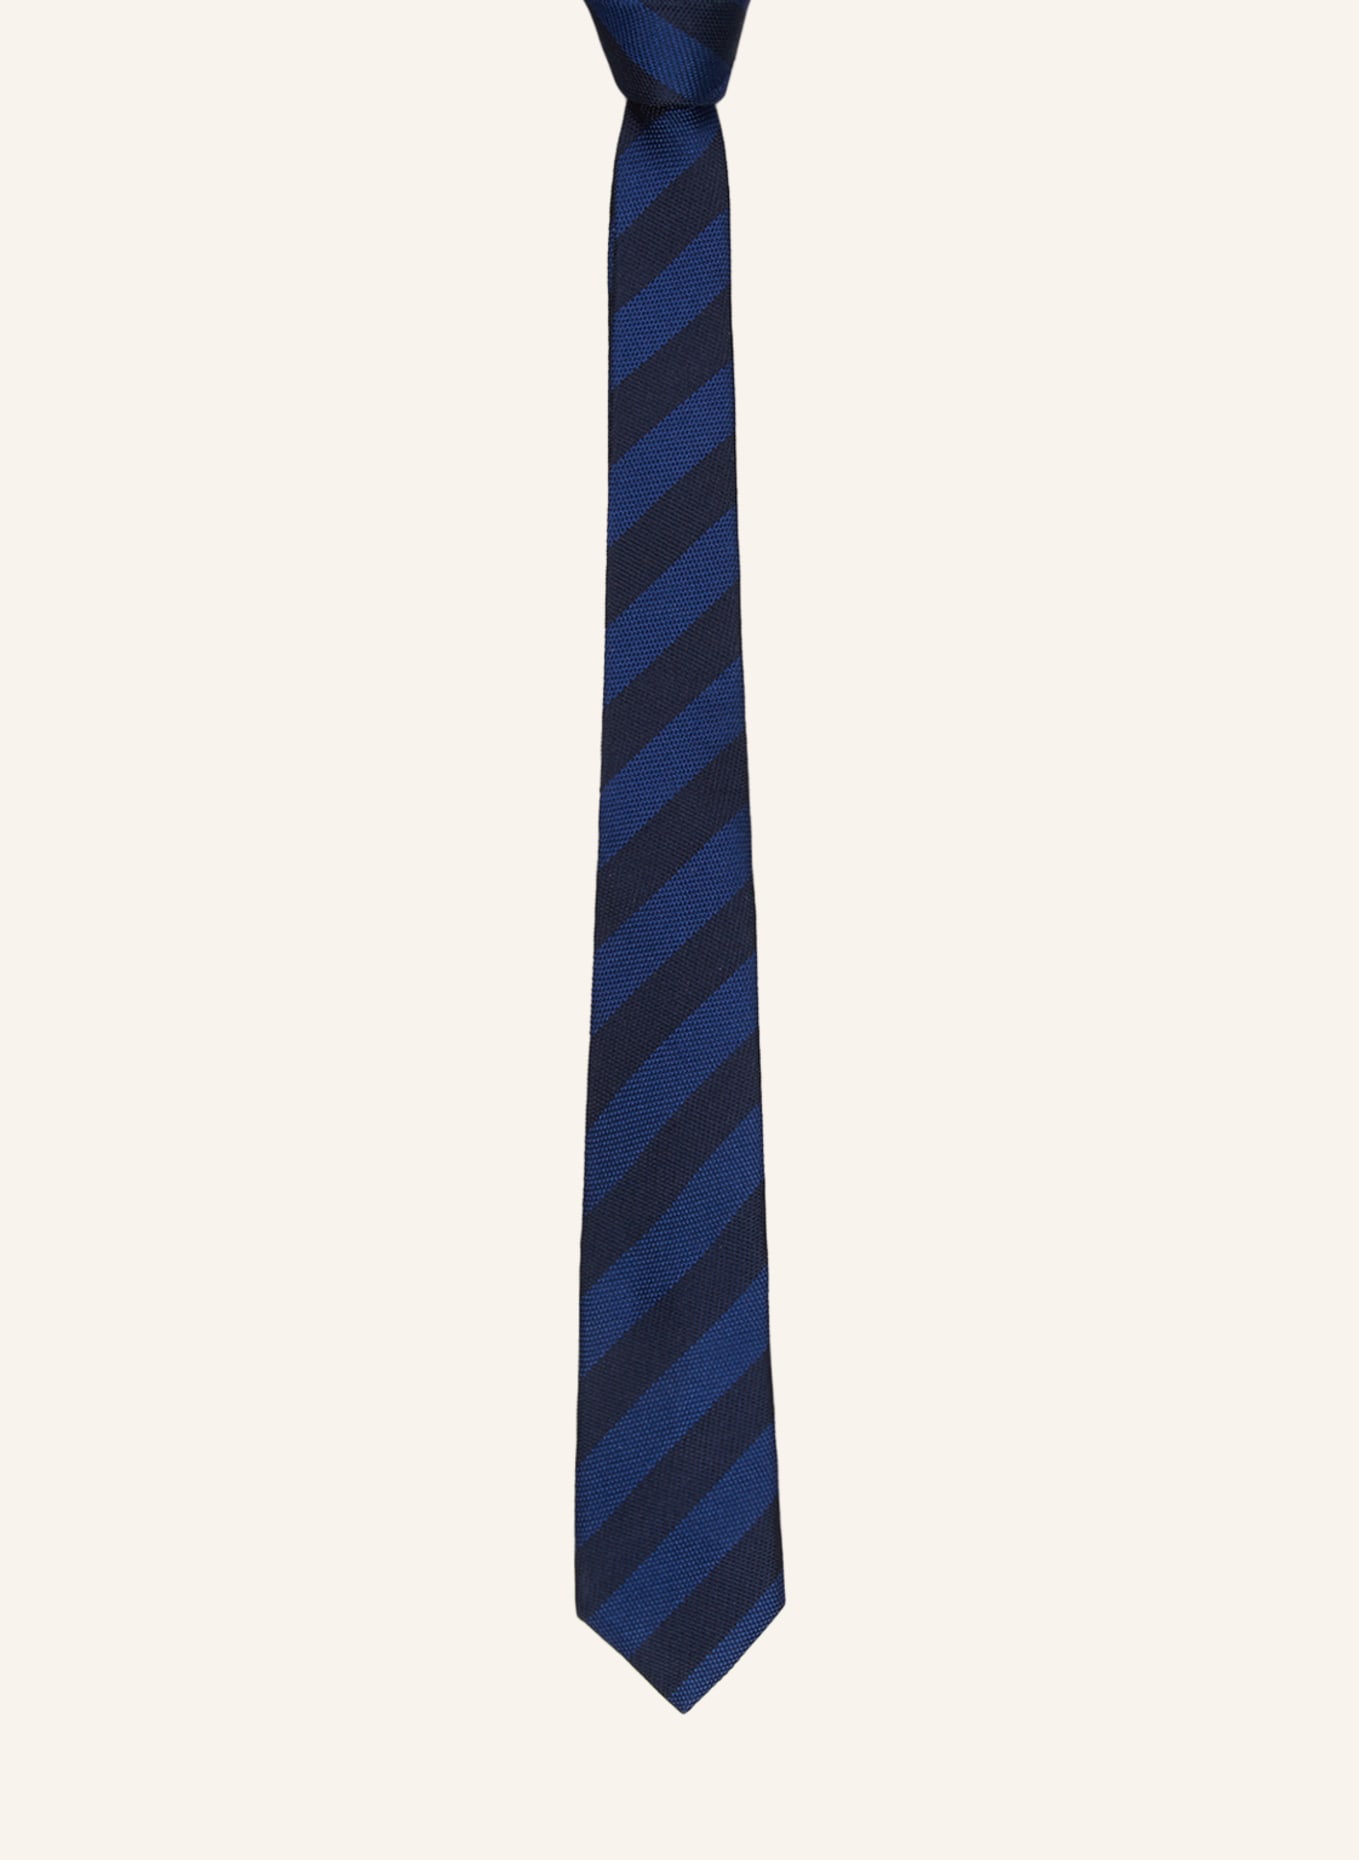 TOMMY HILFIGER Krawatte, Farbe: DUNKELBLAU/ BLAU (Bild 2)